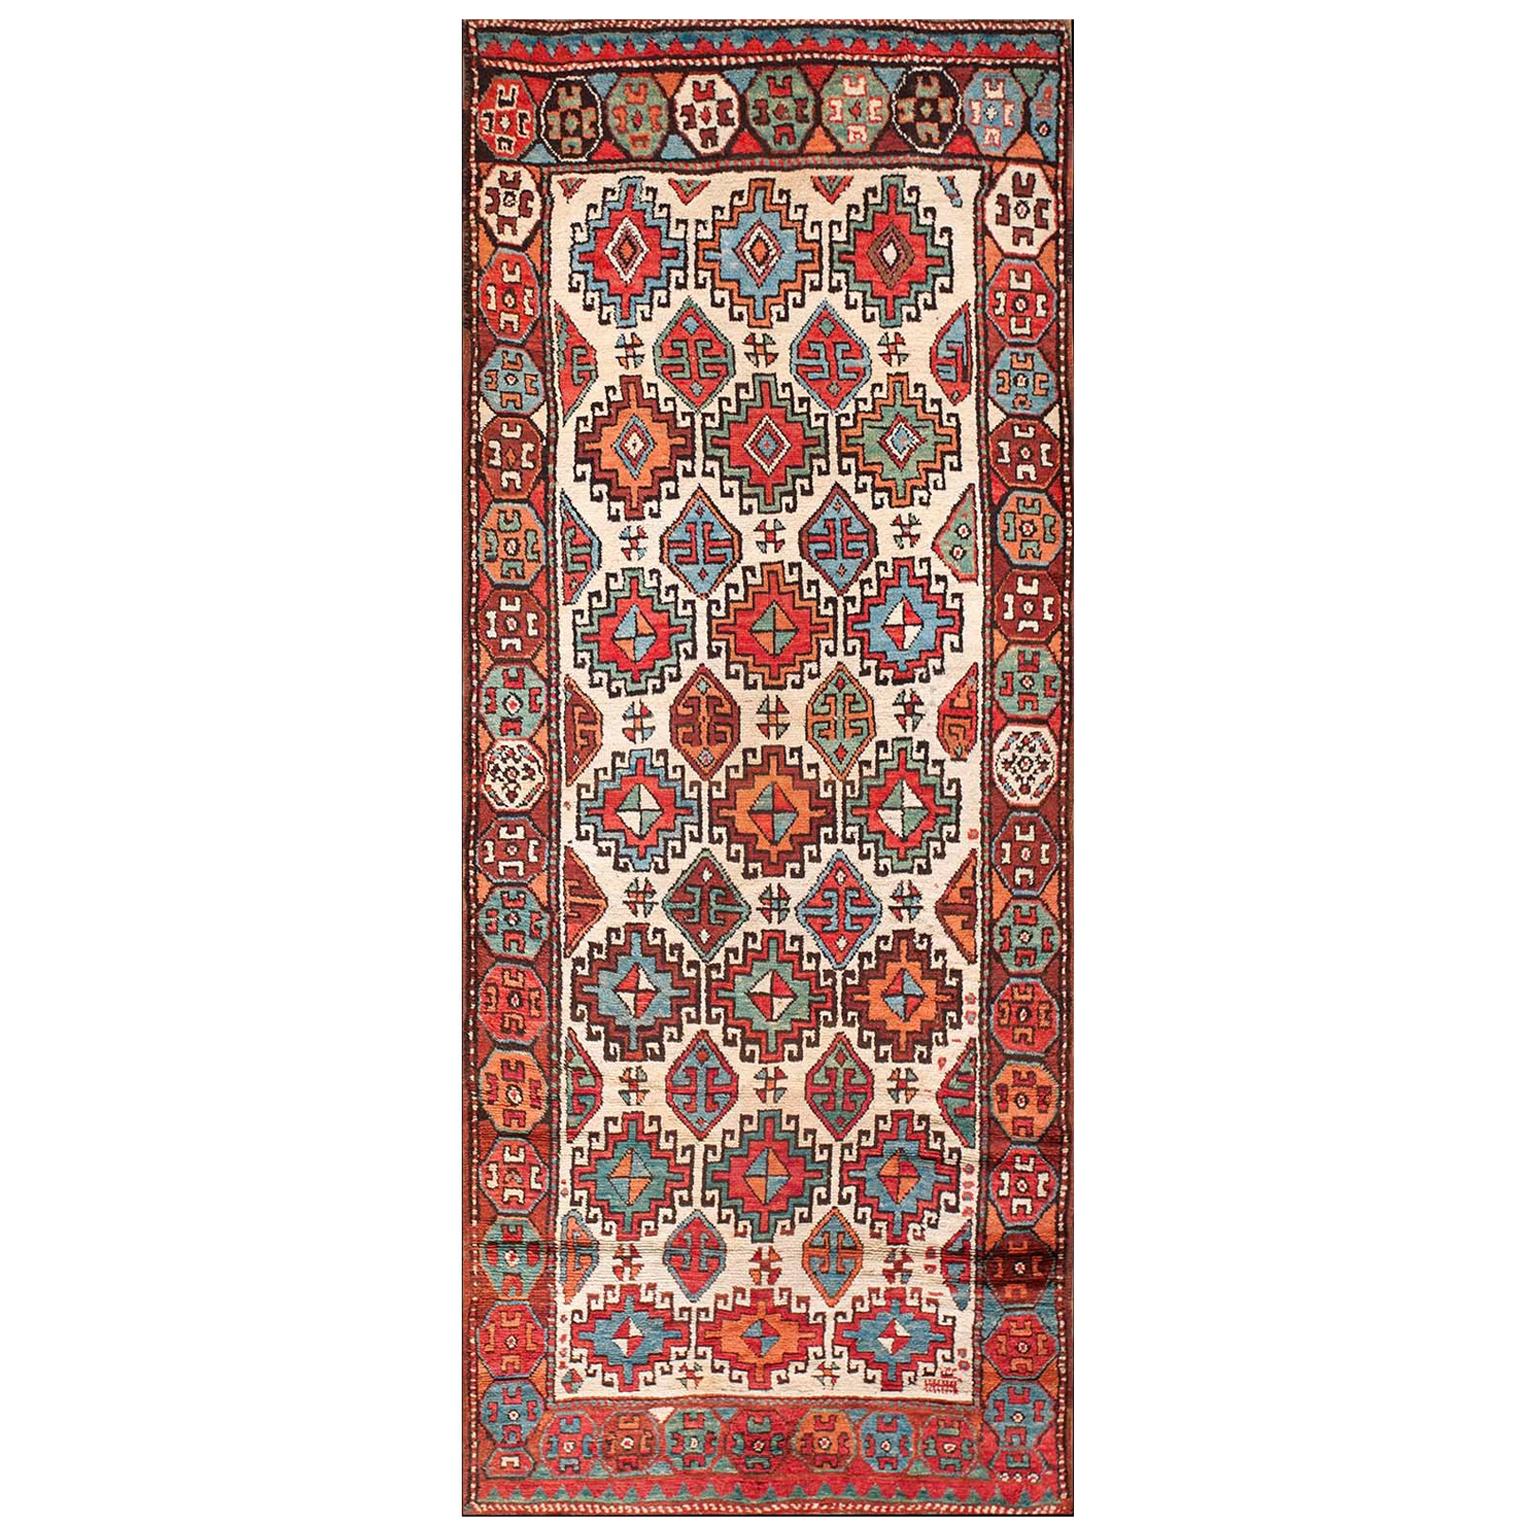 Antique Worn Late 19th Century Persian Rug 3'3” x 6